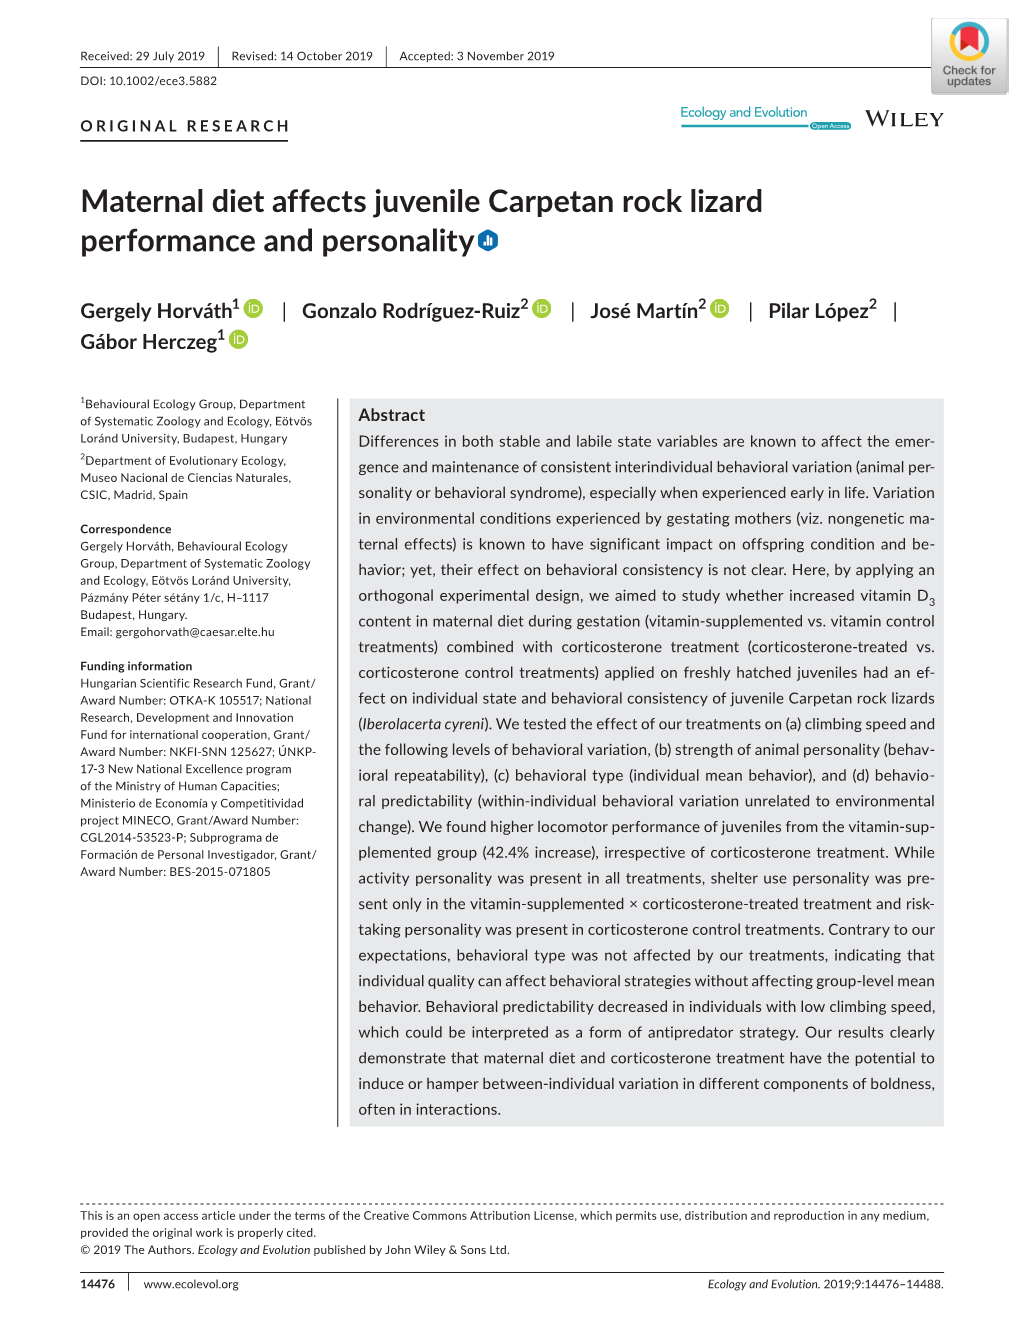 Maternal Diet Affects Juvenile Carpetan Rock Lizard Performance and Personality